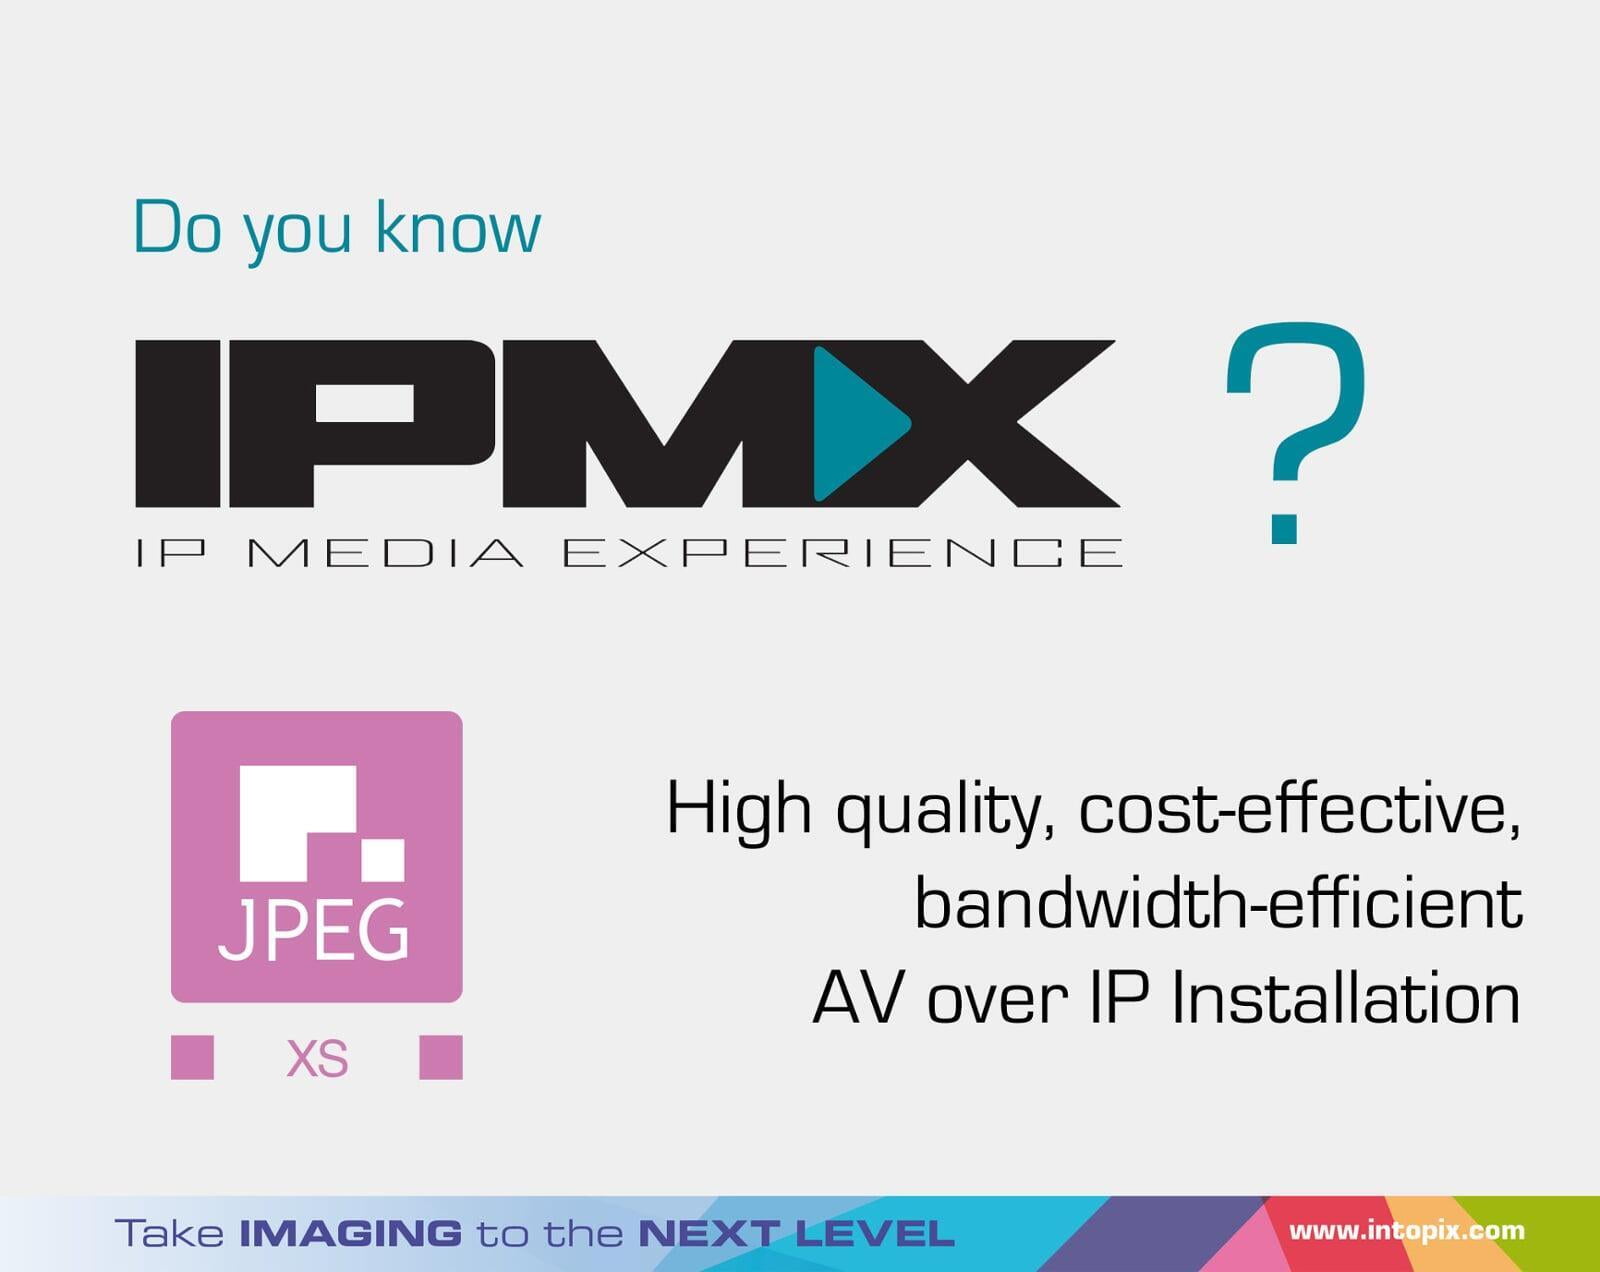 IPMX가 무엇을 의미하는지 아십니까?